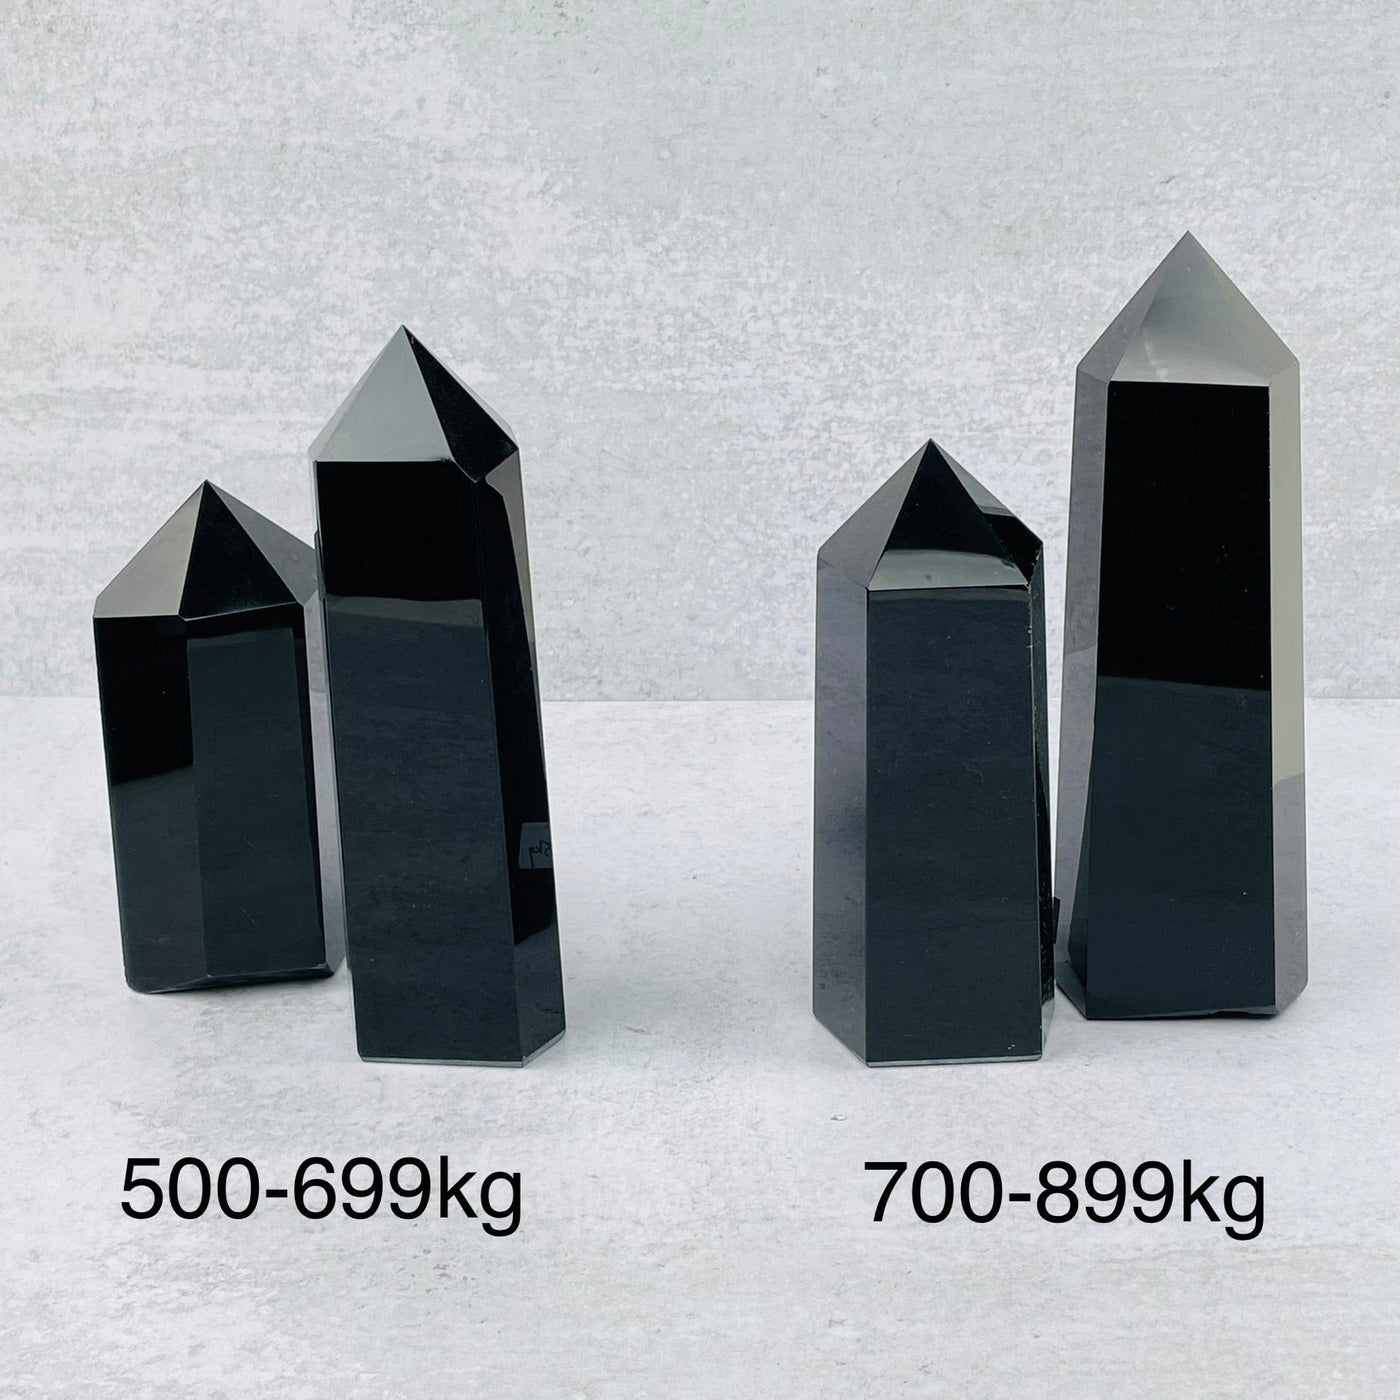 black obsidian towers next to their sizes 